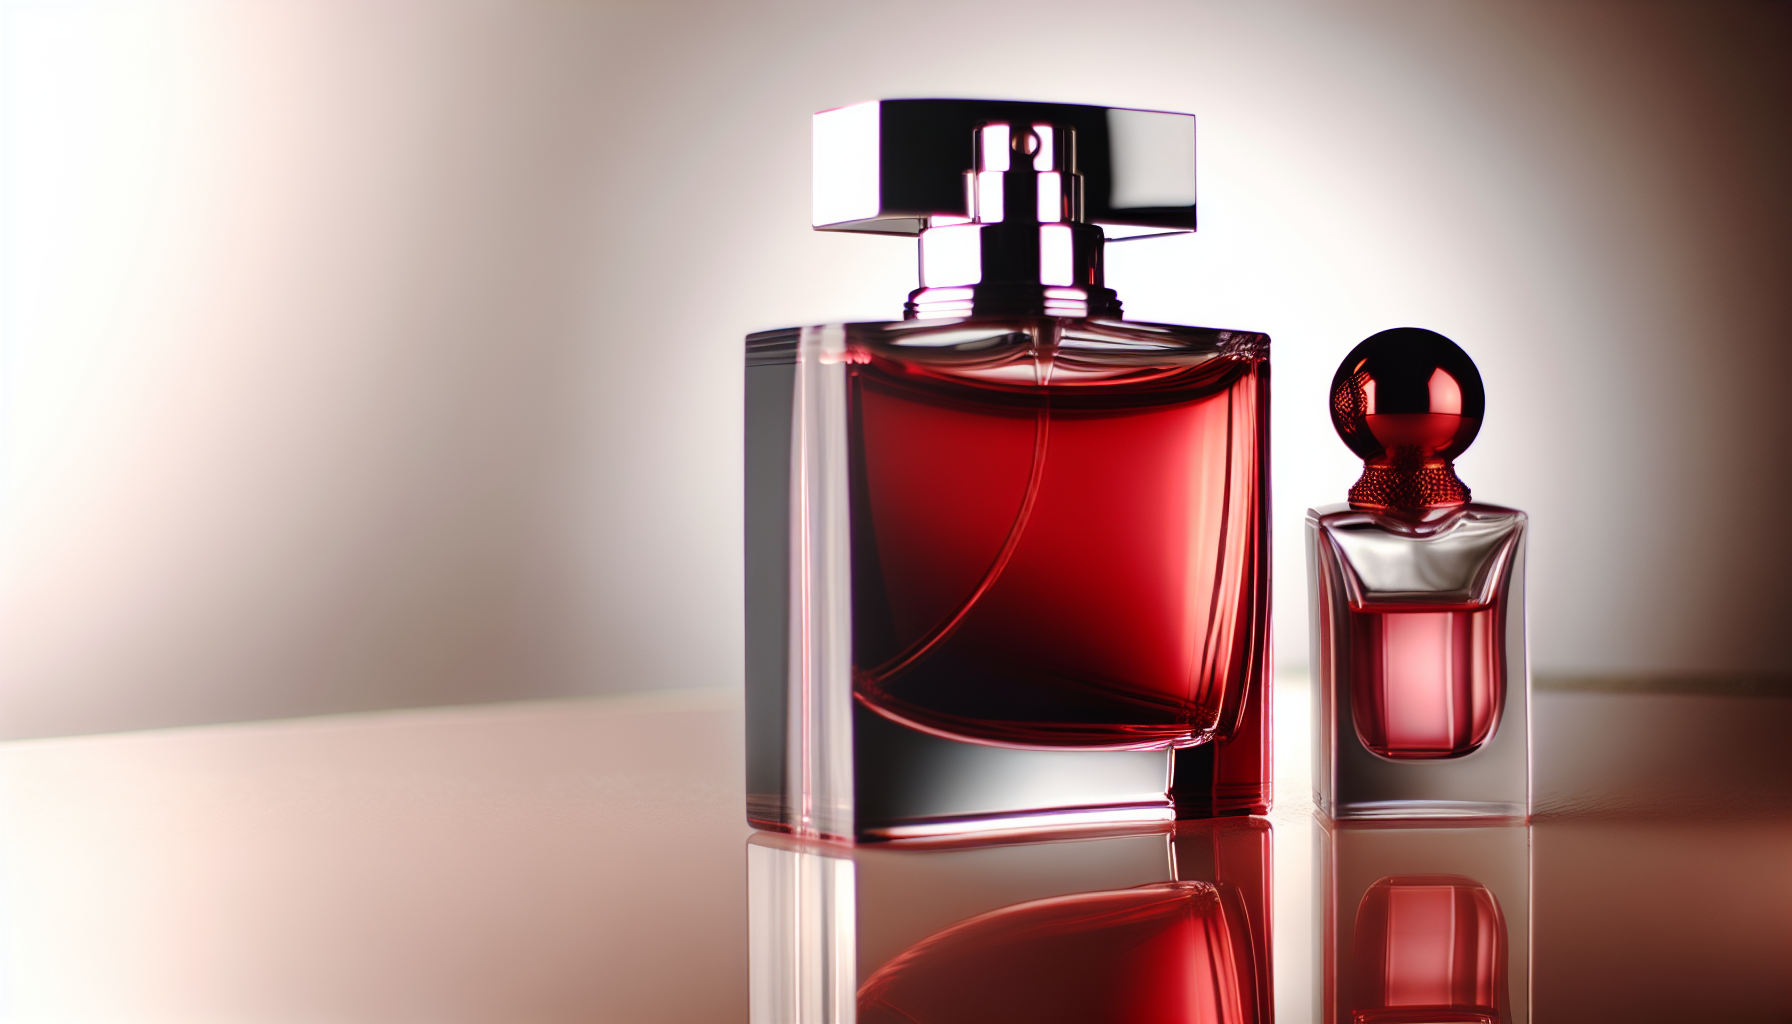 Bottle of Zara's Red Temptation perfume